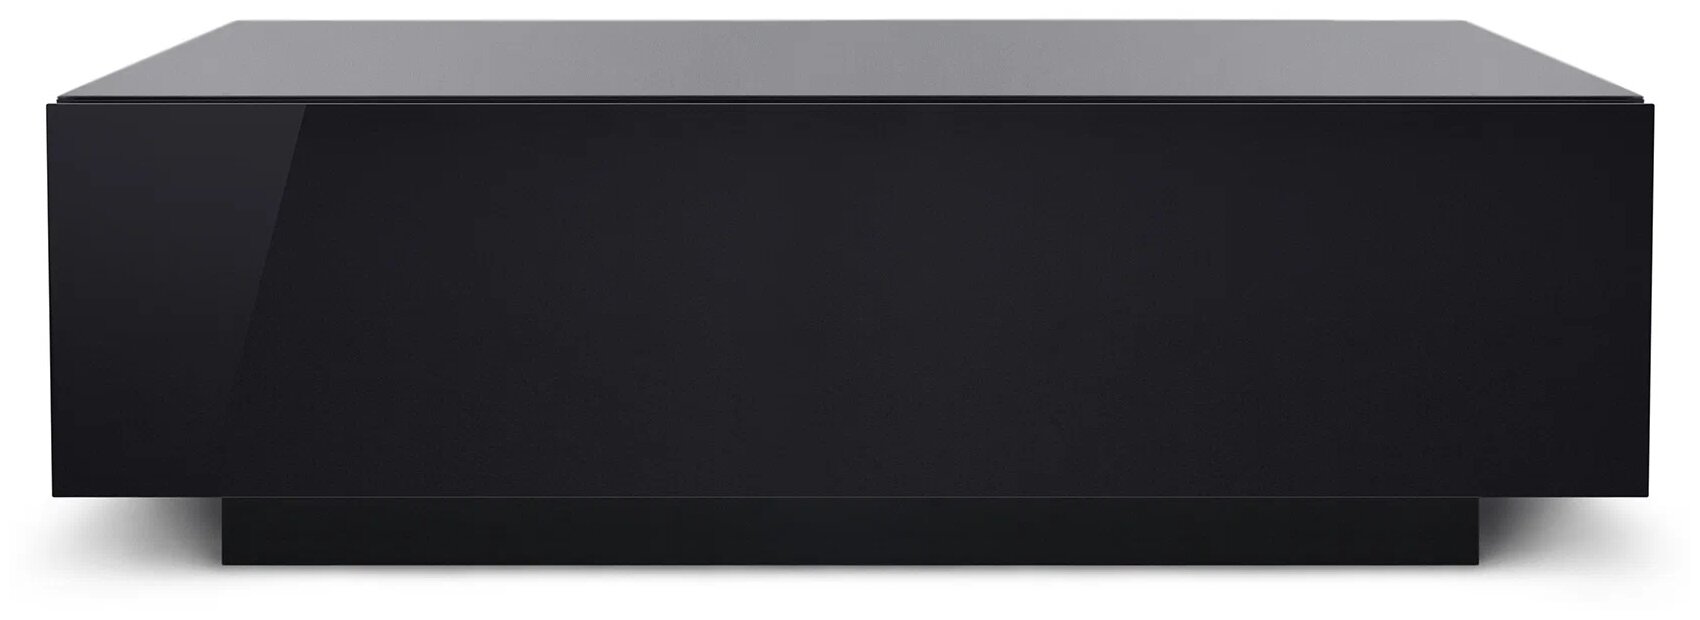 Тумба под телевизор MetalDesign MD 651, ШхГхВ: 150х42х45 см, цвет: черный - фотография № 1